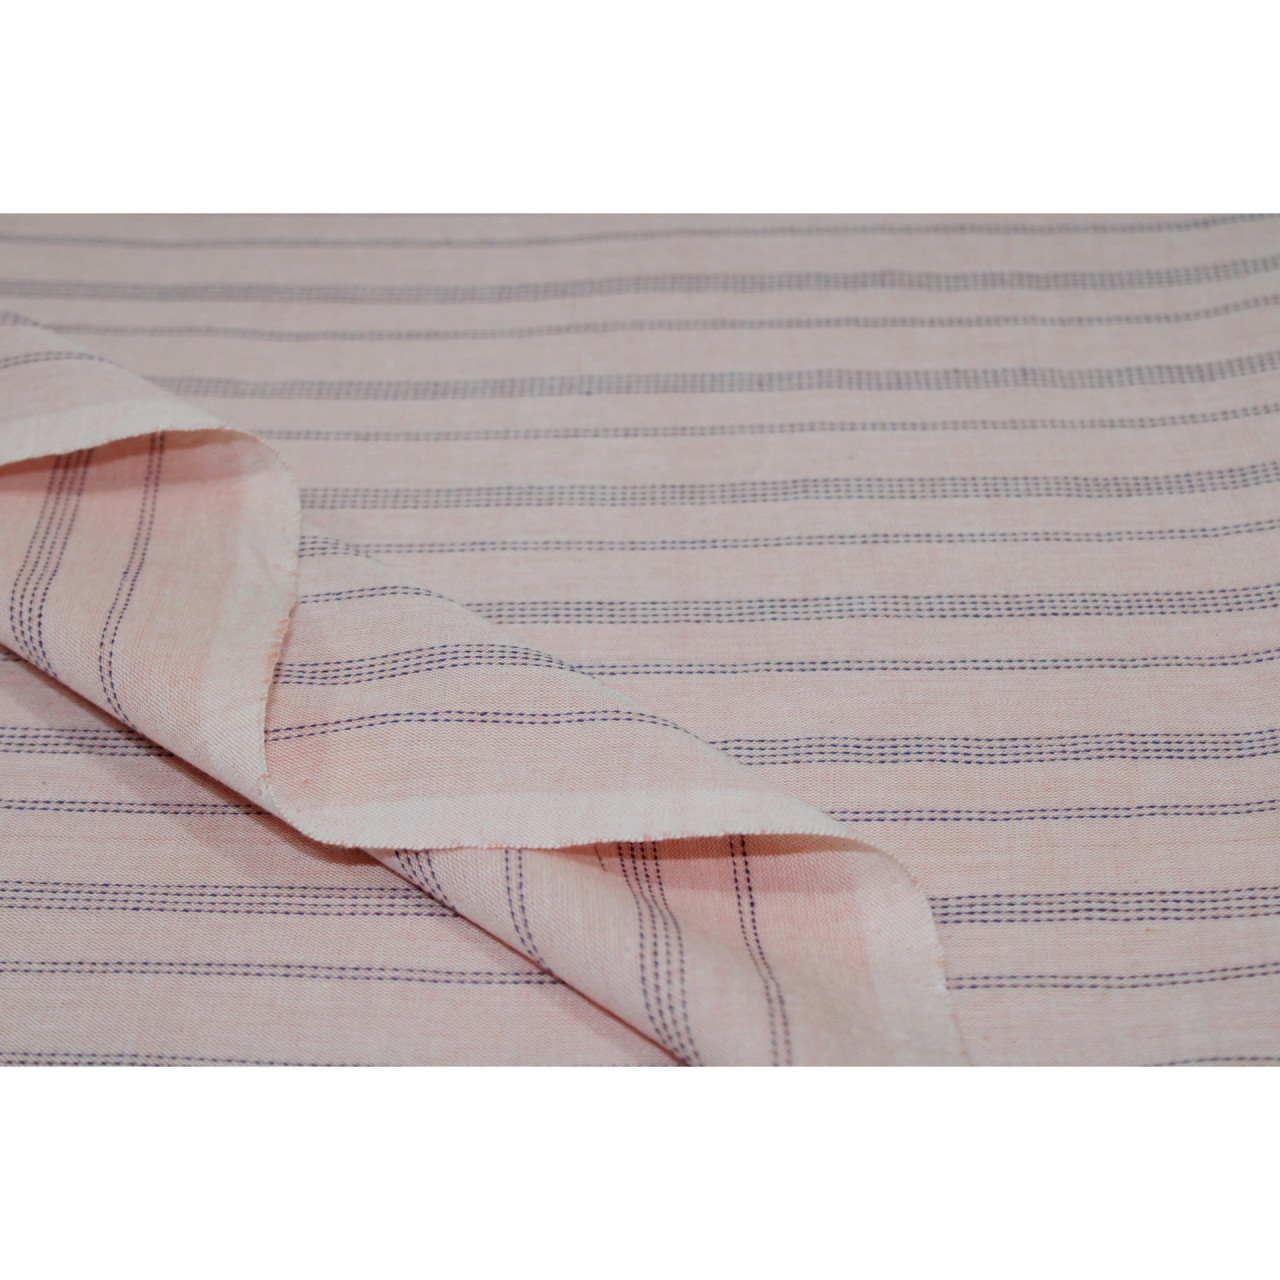 (181) Cotton Azo free dyed yardage from Chhattisgarh - Light saffron, vertical stripes